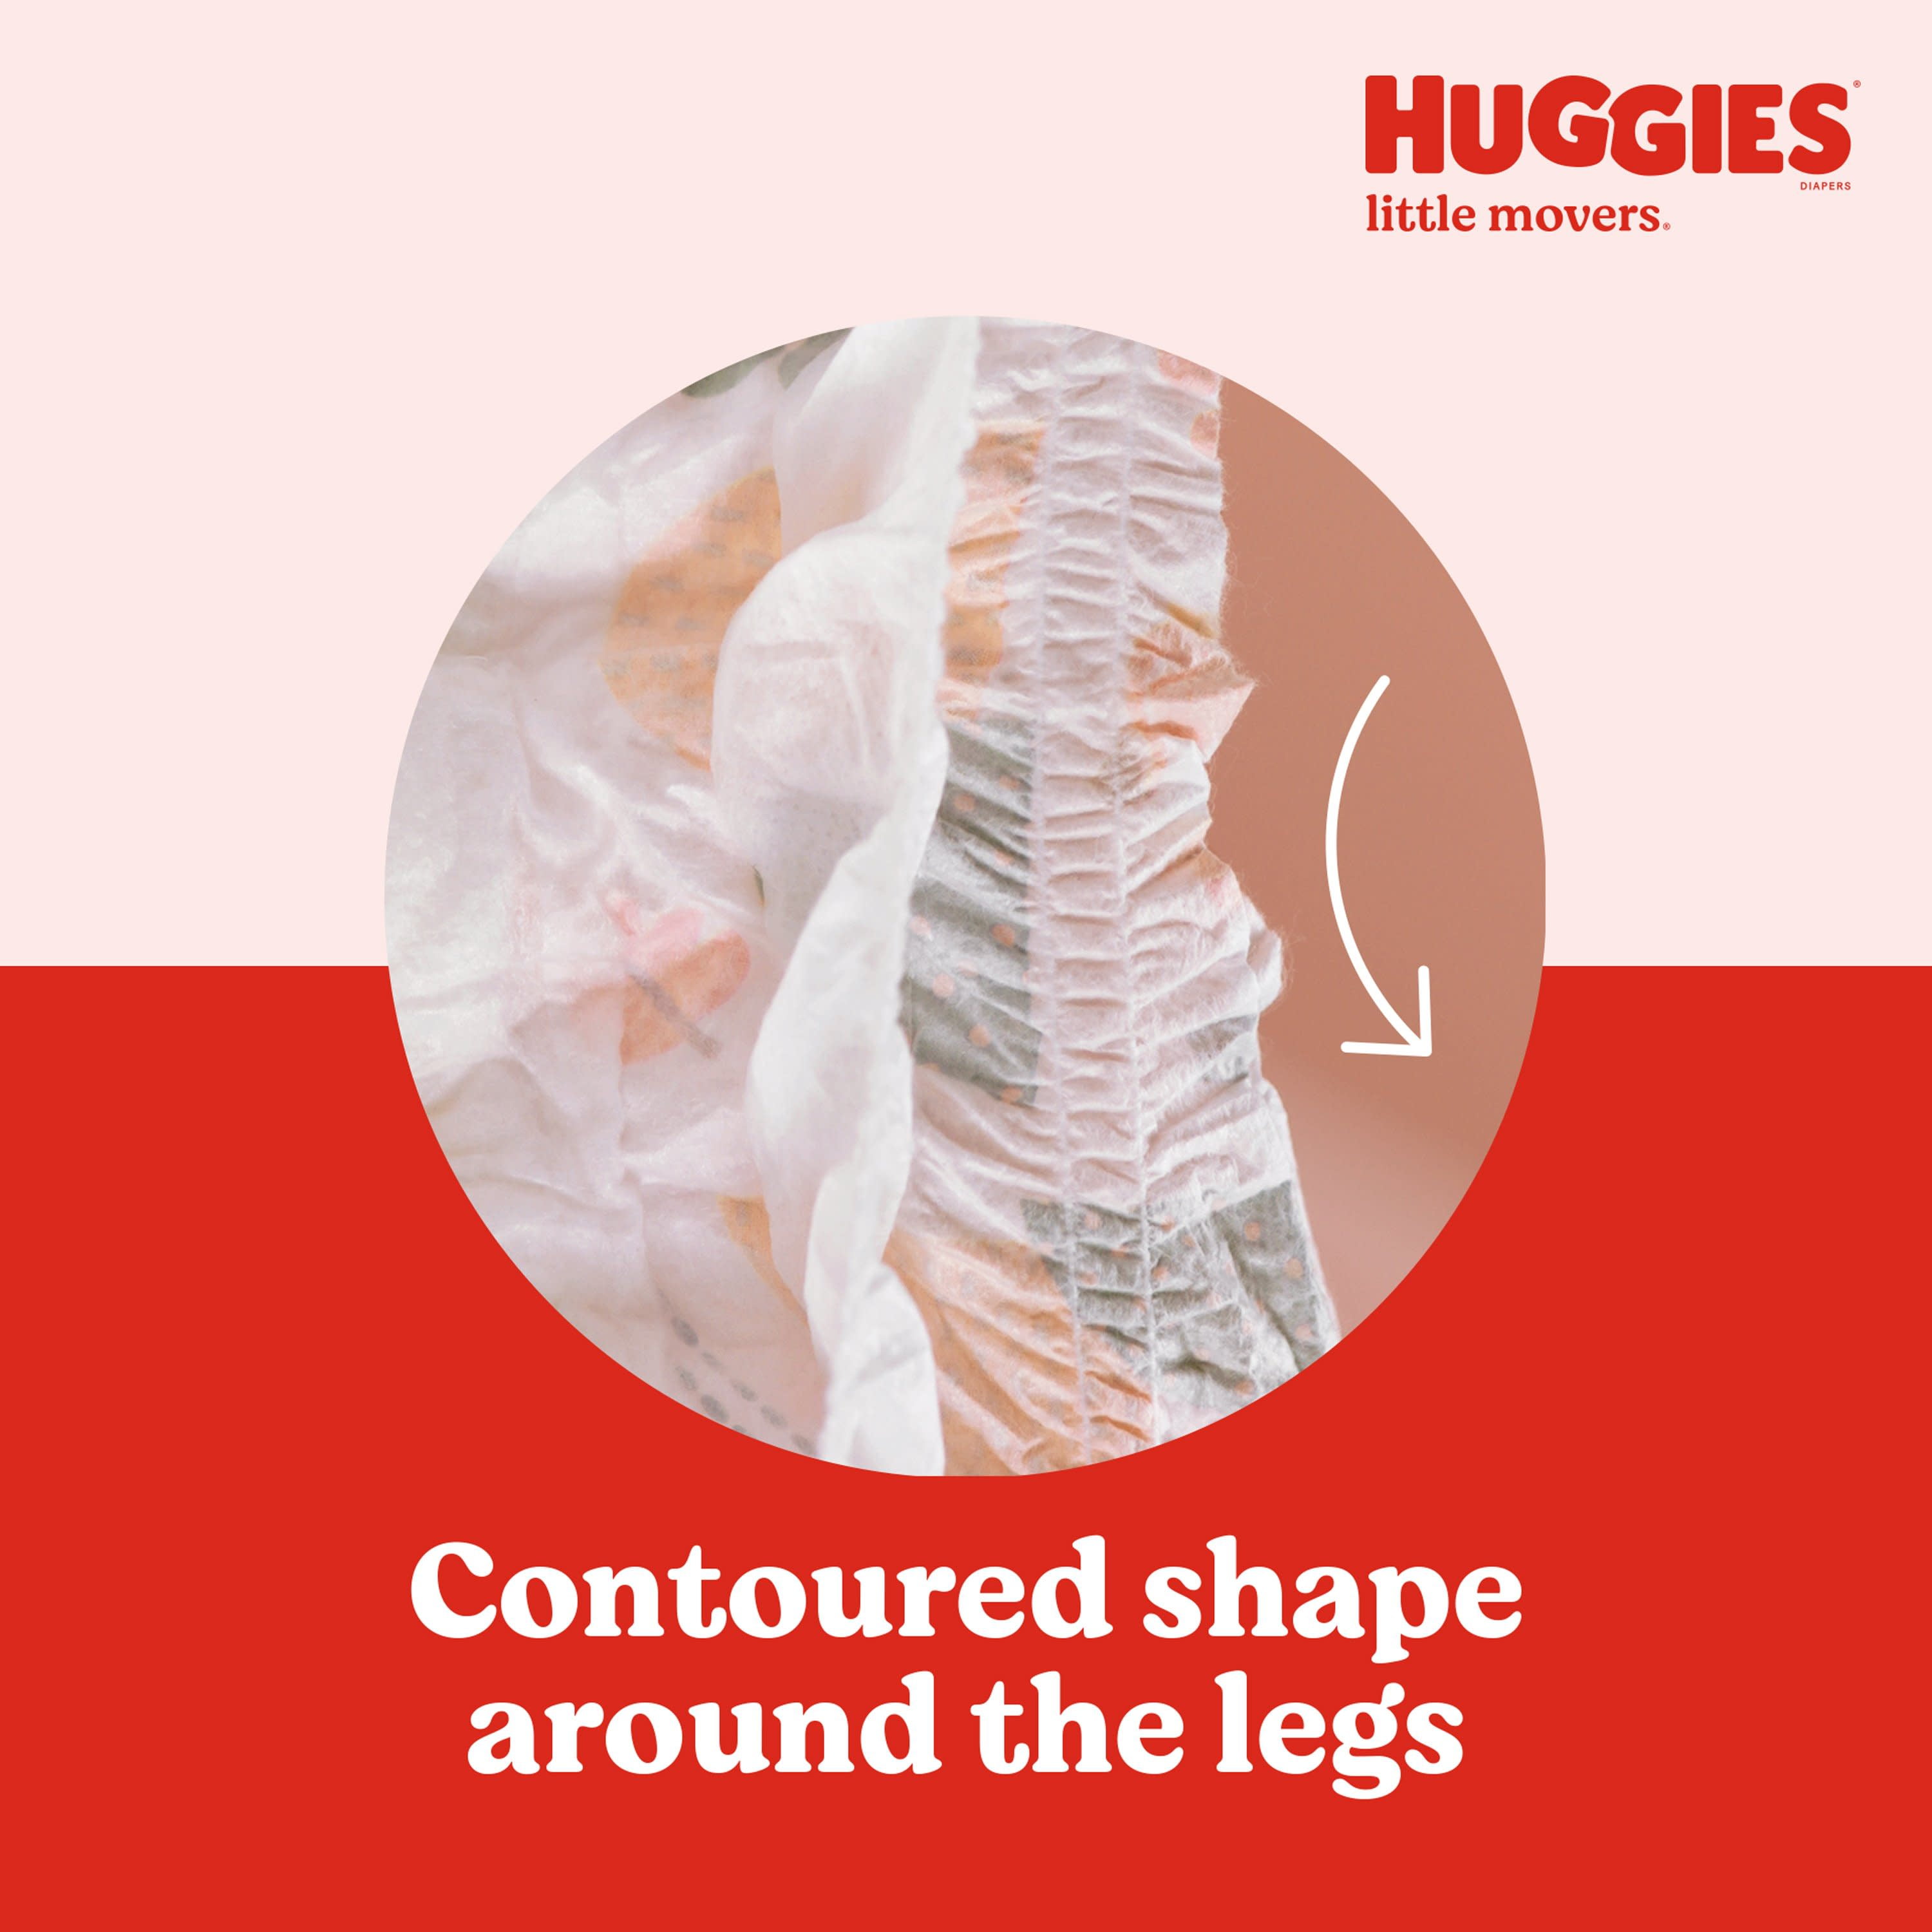 Huggies Diapers - Size 4 7-18 kg - 50 pieces - Ultra Comfort –